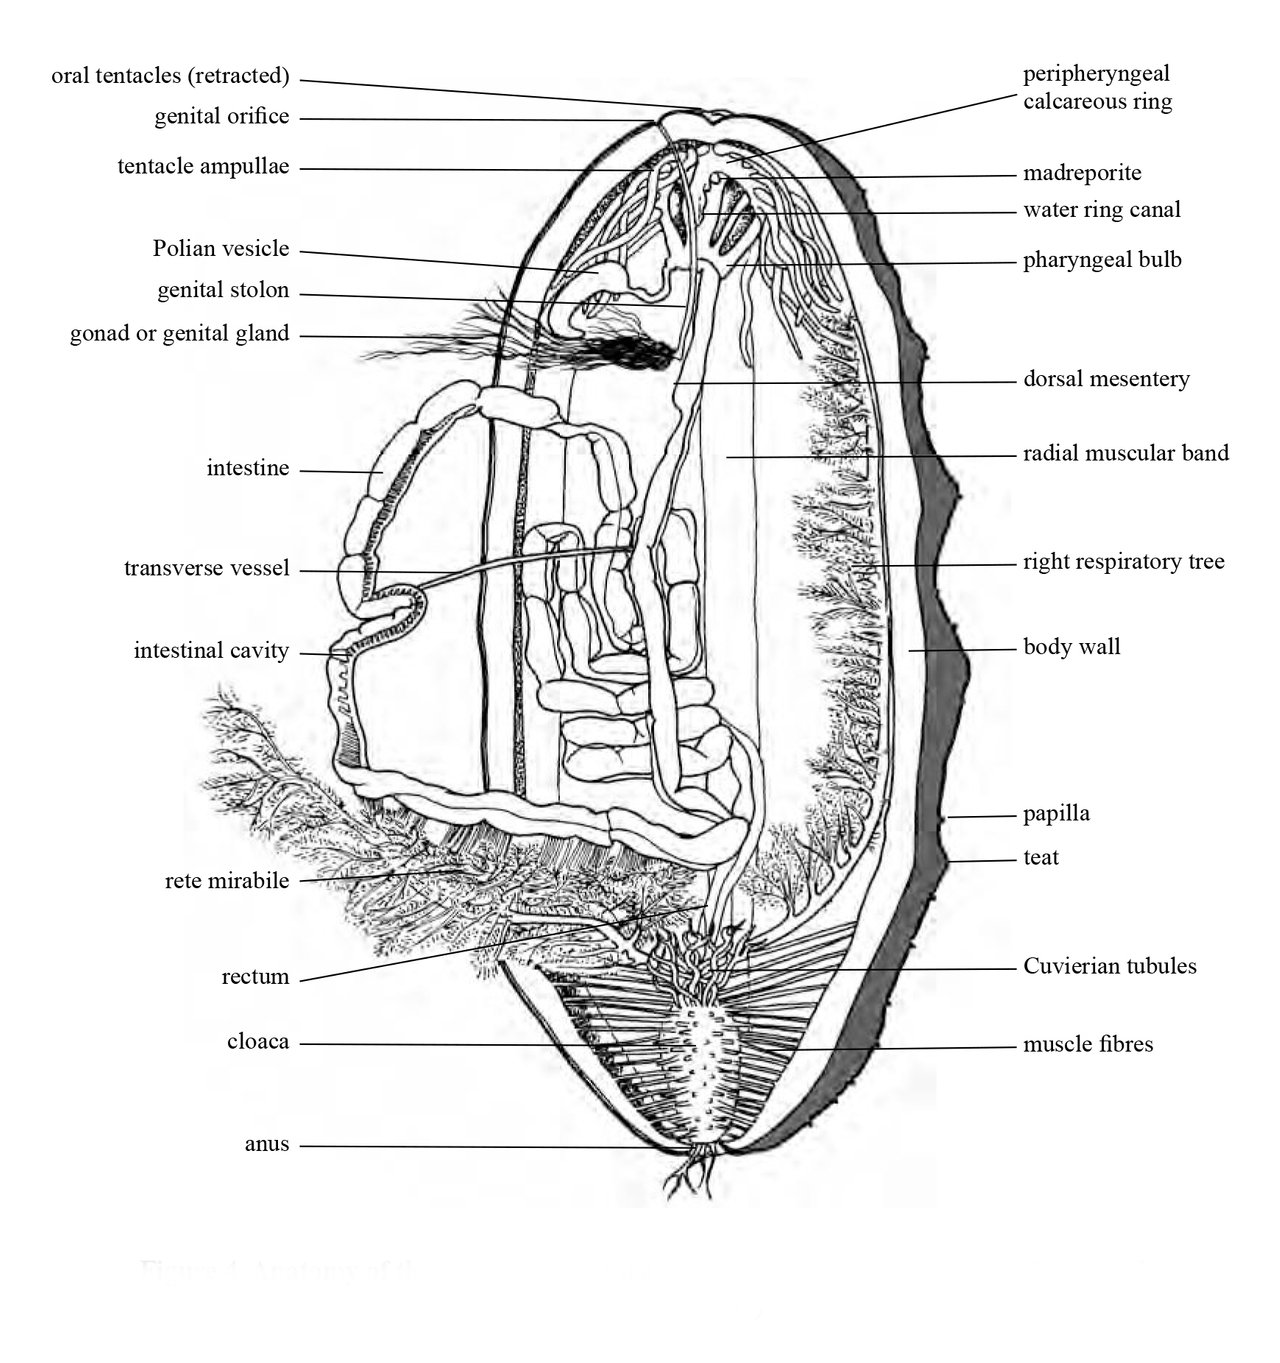 sea cucumber anatomy